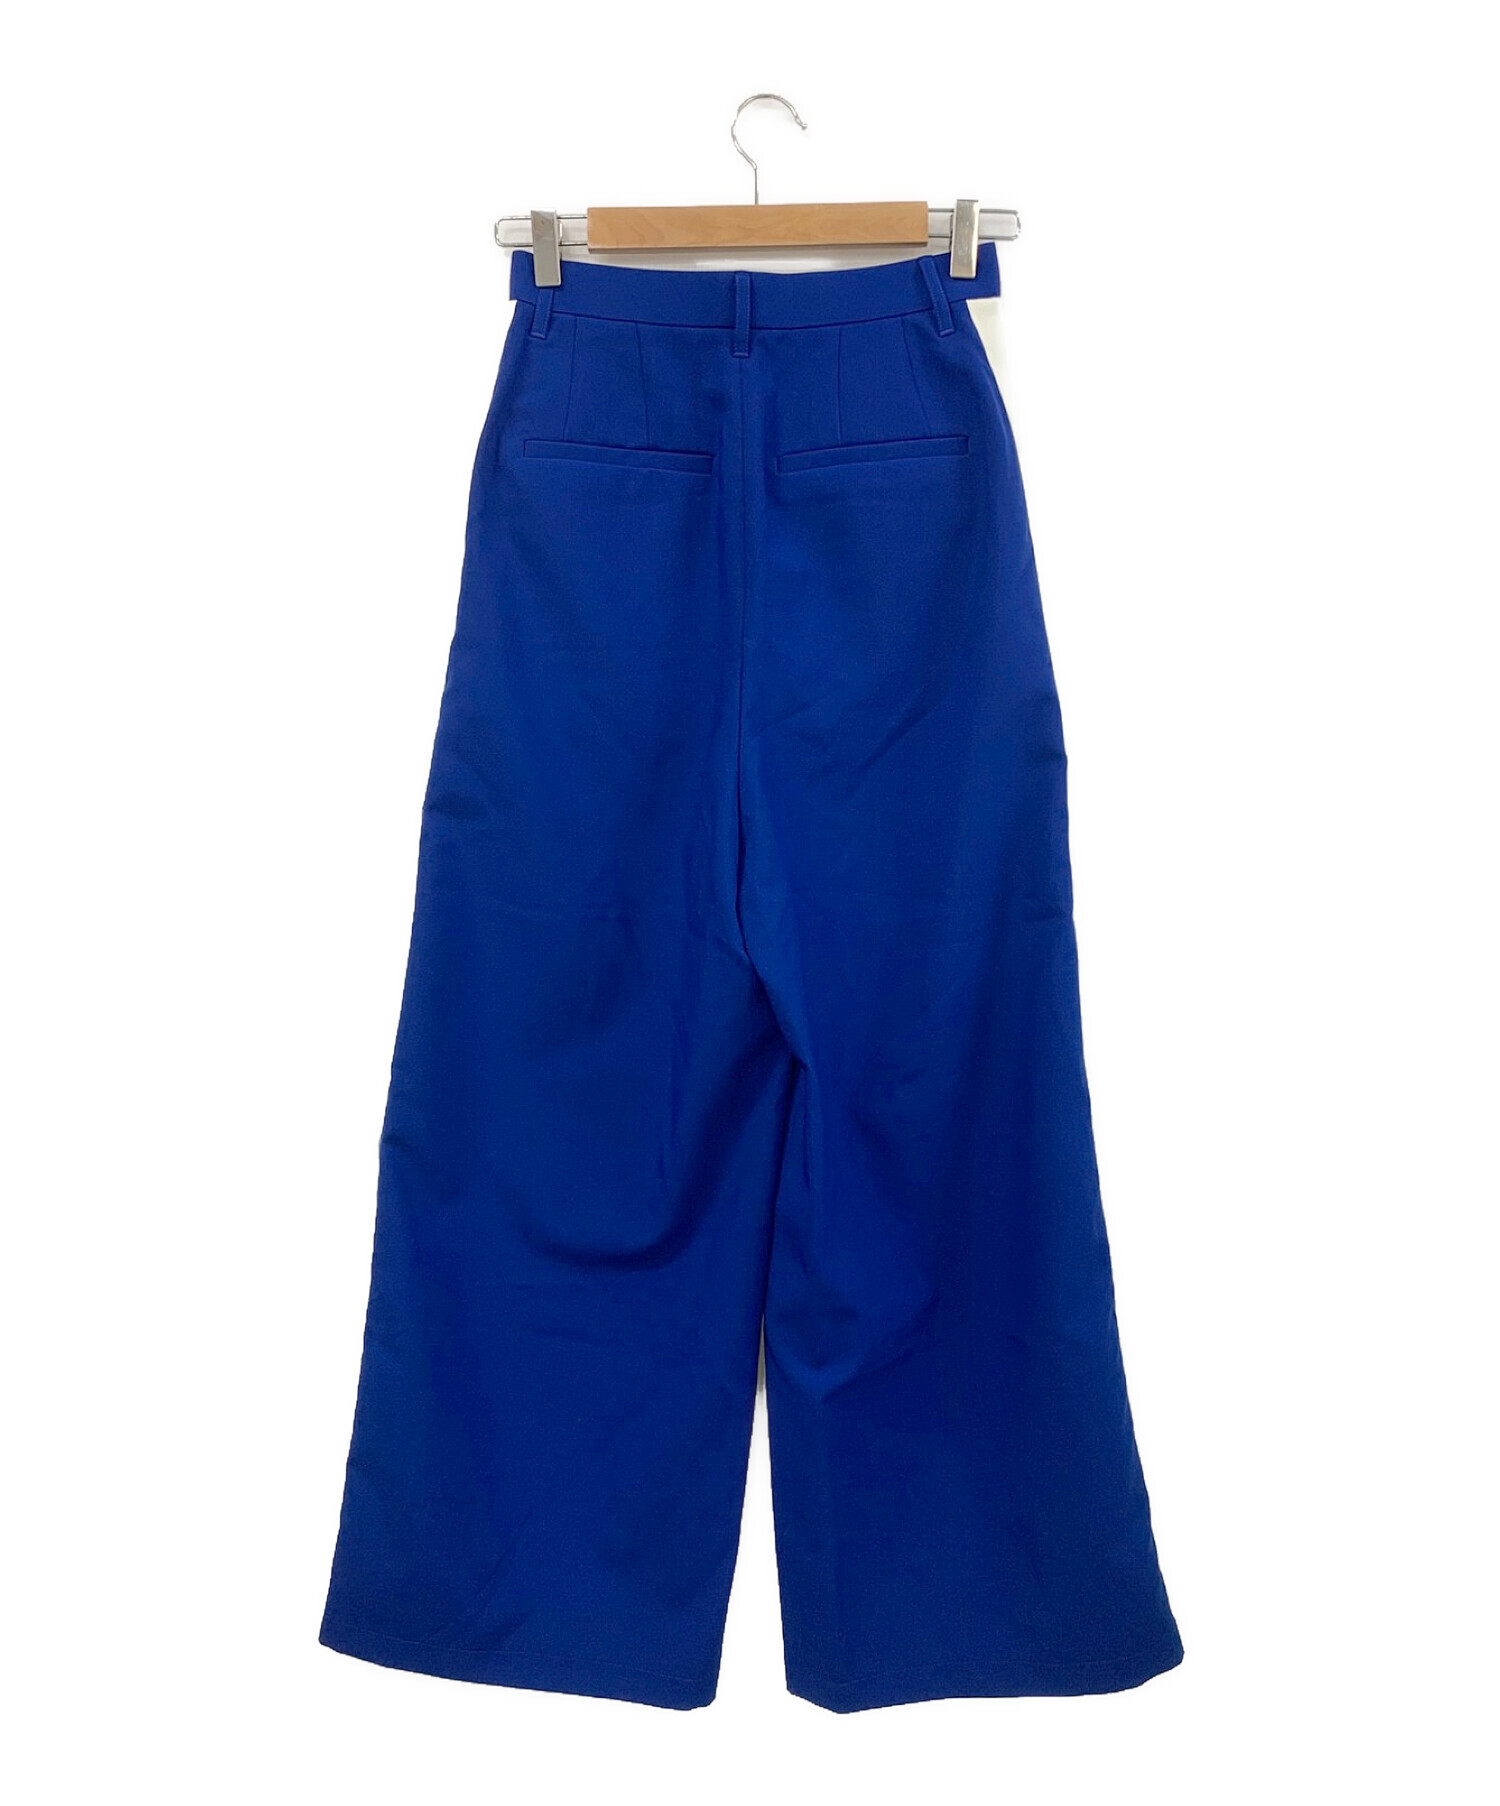 nagonstans (ナゴンスタンス) ソフトオックス サイドラインpants ブルー サイズ:S